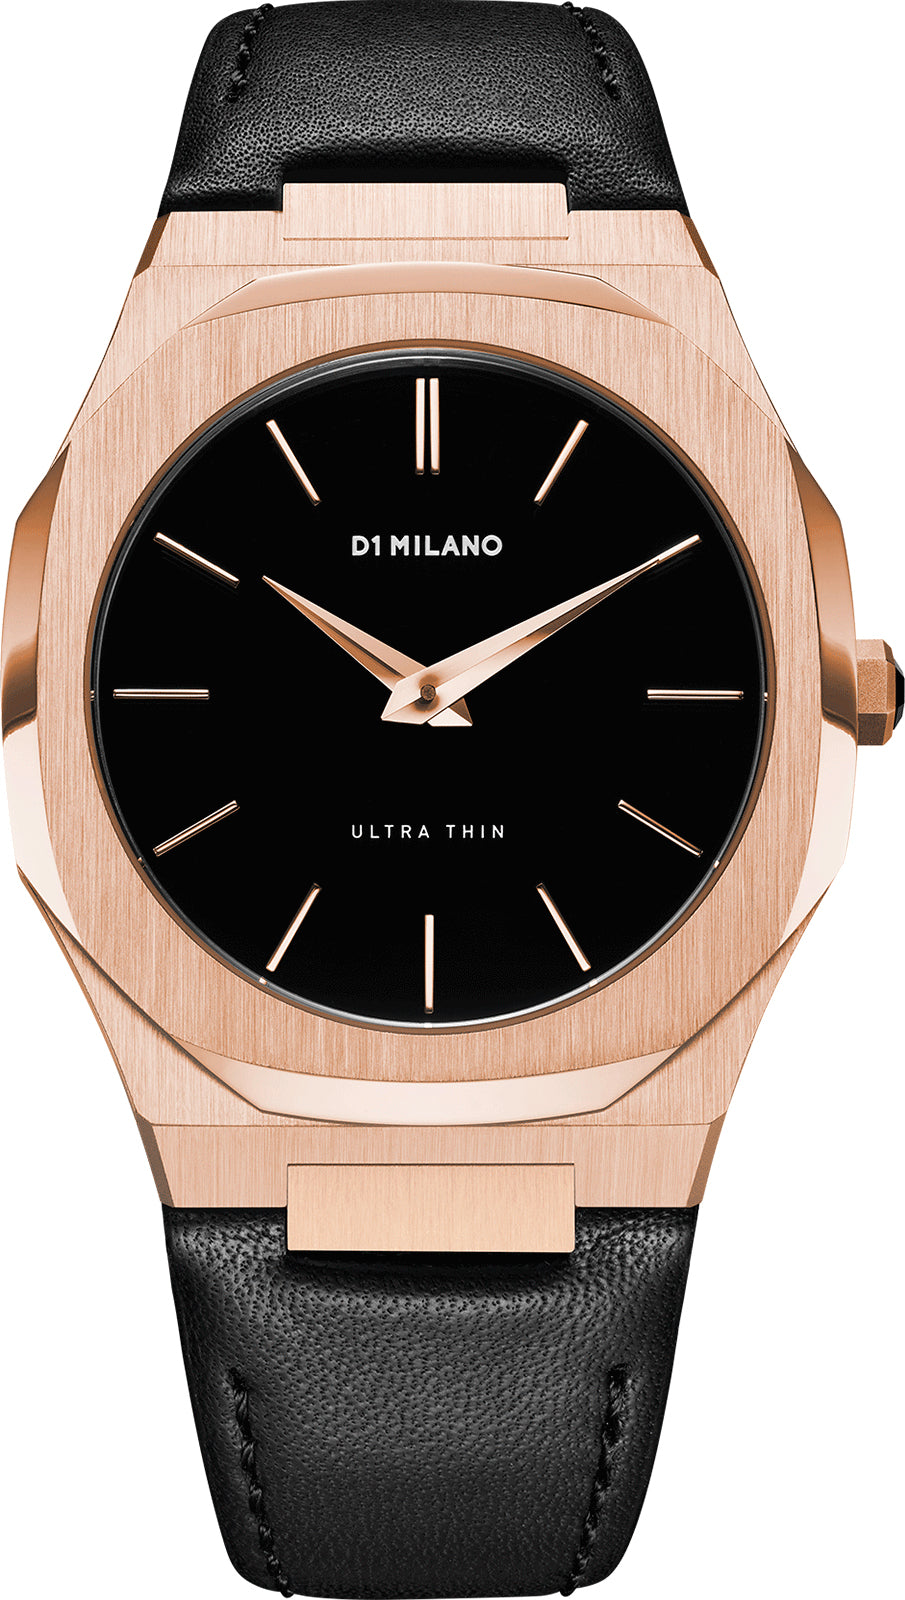 Photos - Wrist Watch Milano D1  Watch Ultra Thin - Black DLM-046 